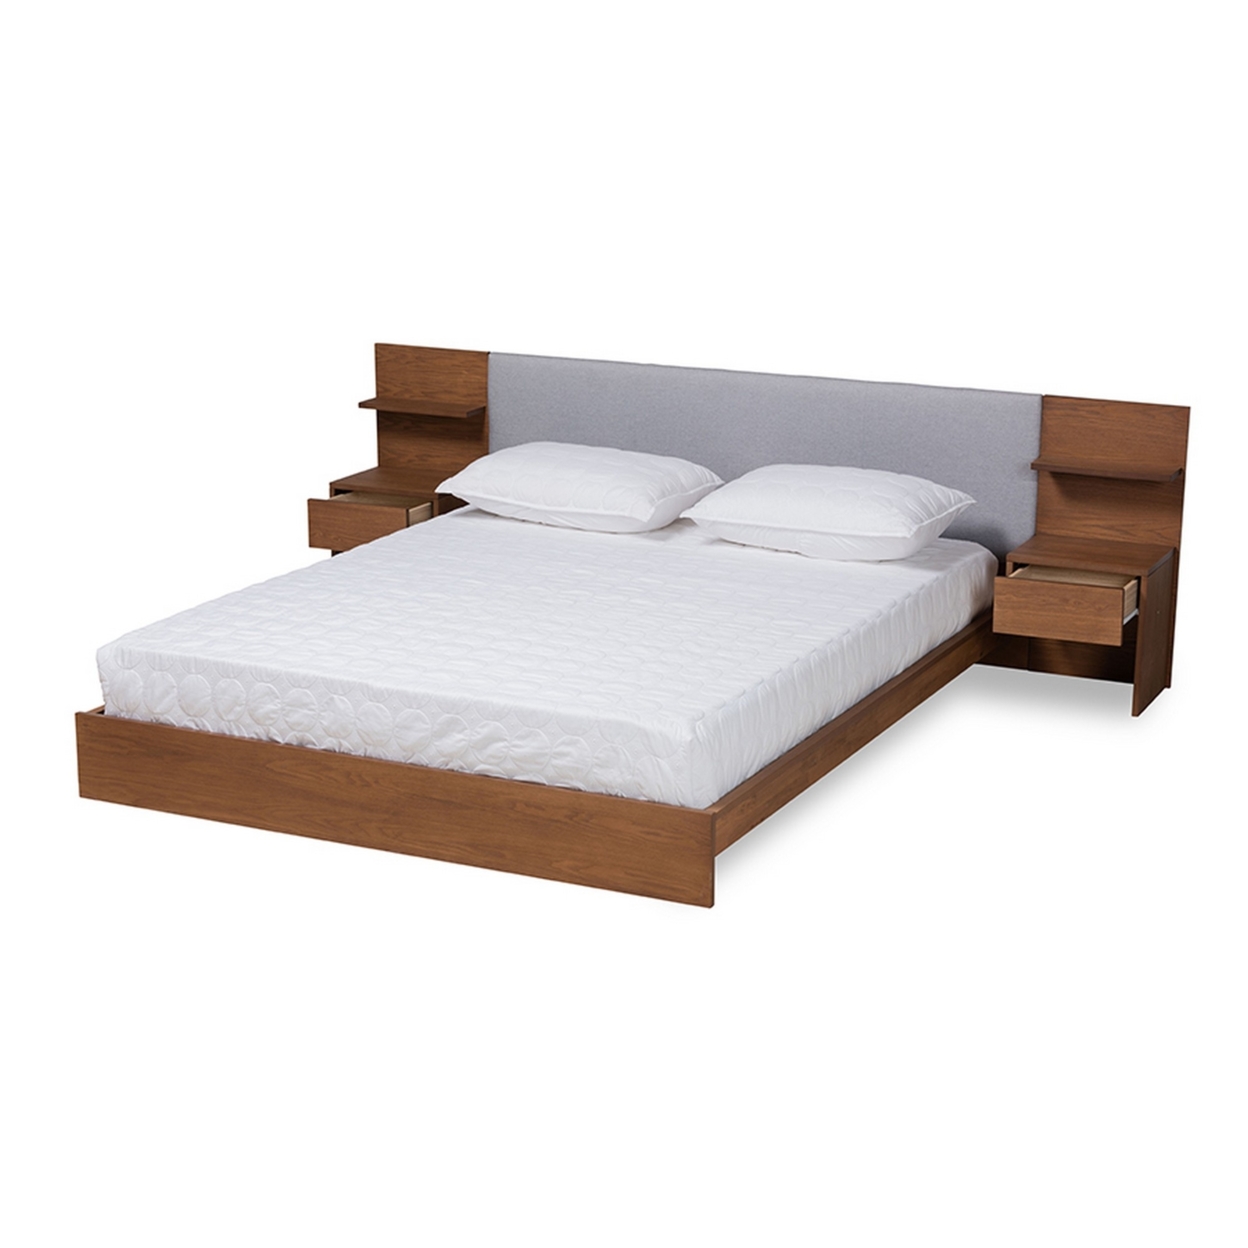 Sami Wood Queen Size Platform Storage Bed with Built-In Nightstands - image 2 of 5